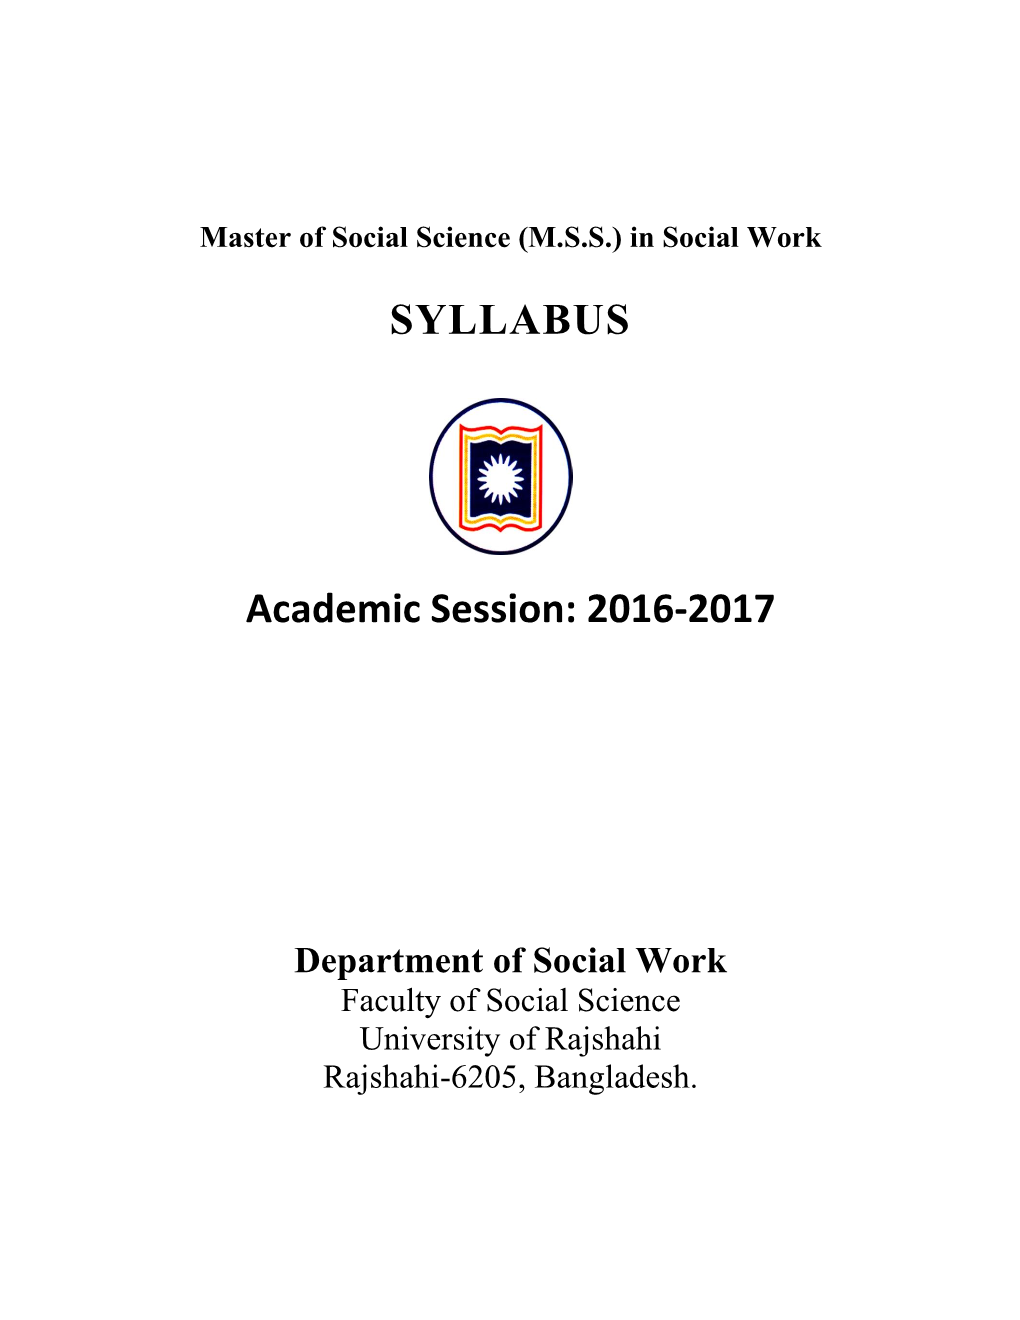 (MSS) in Social Work